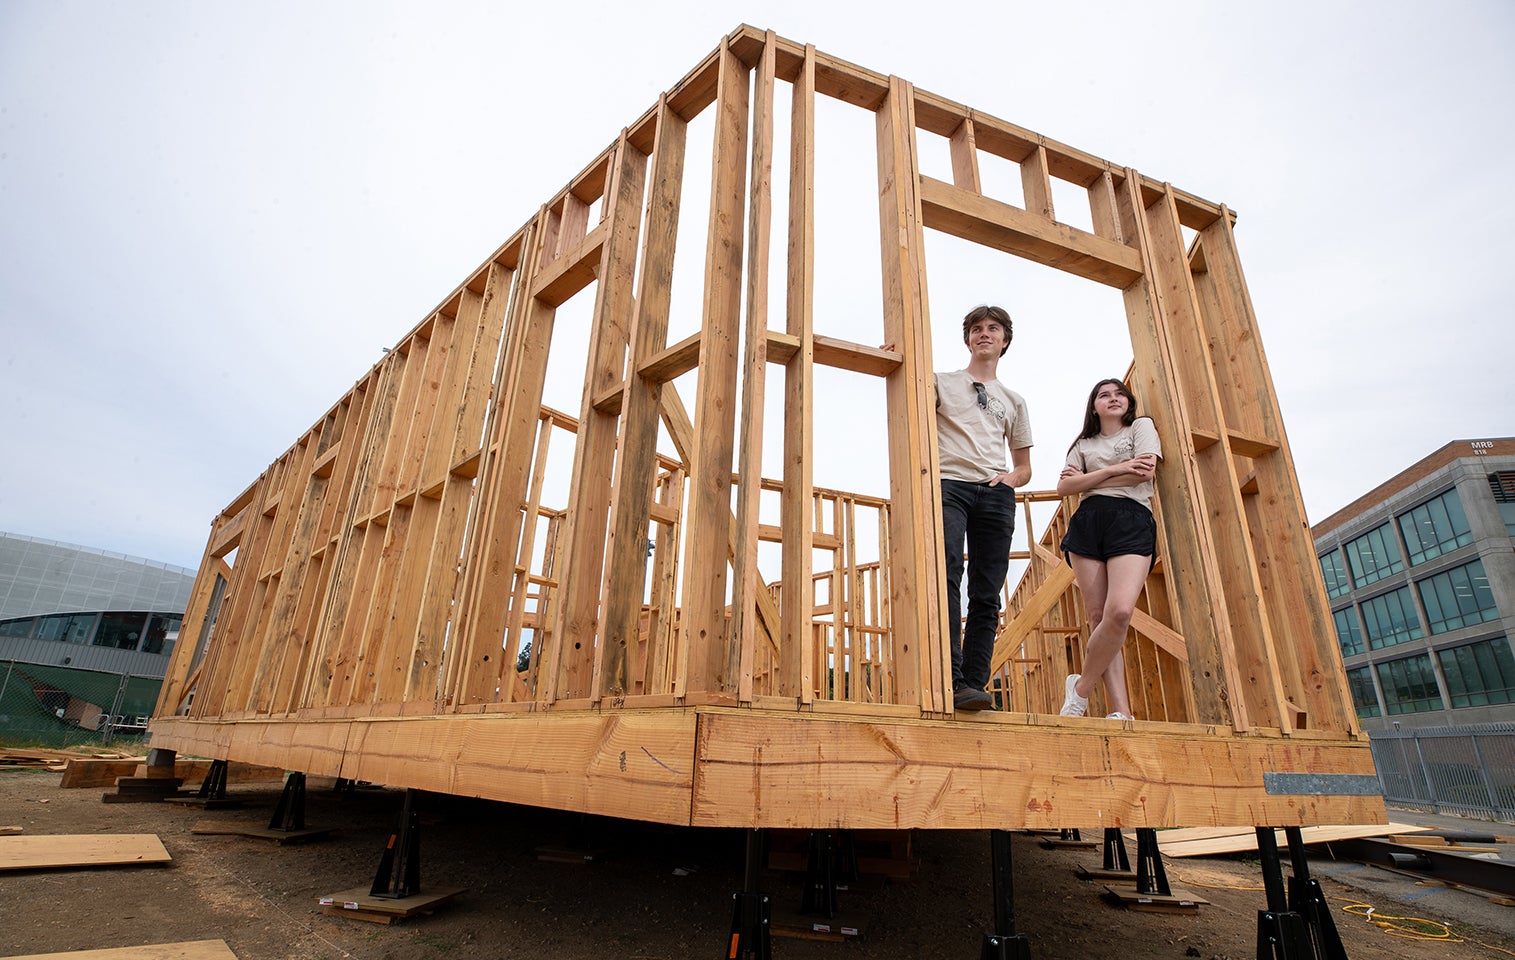 Students design & build affordable, energy-efficient home